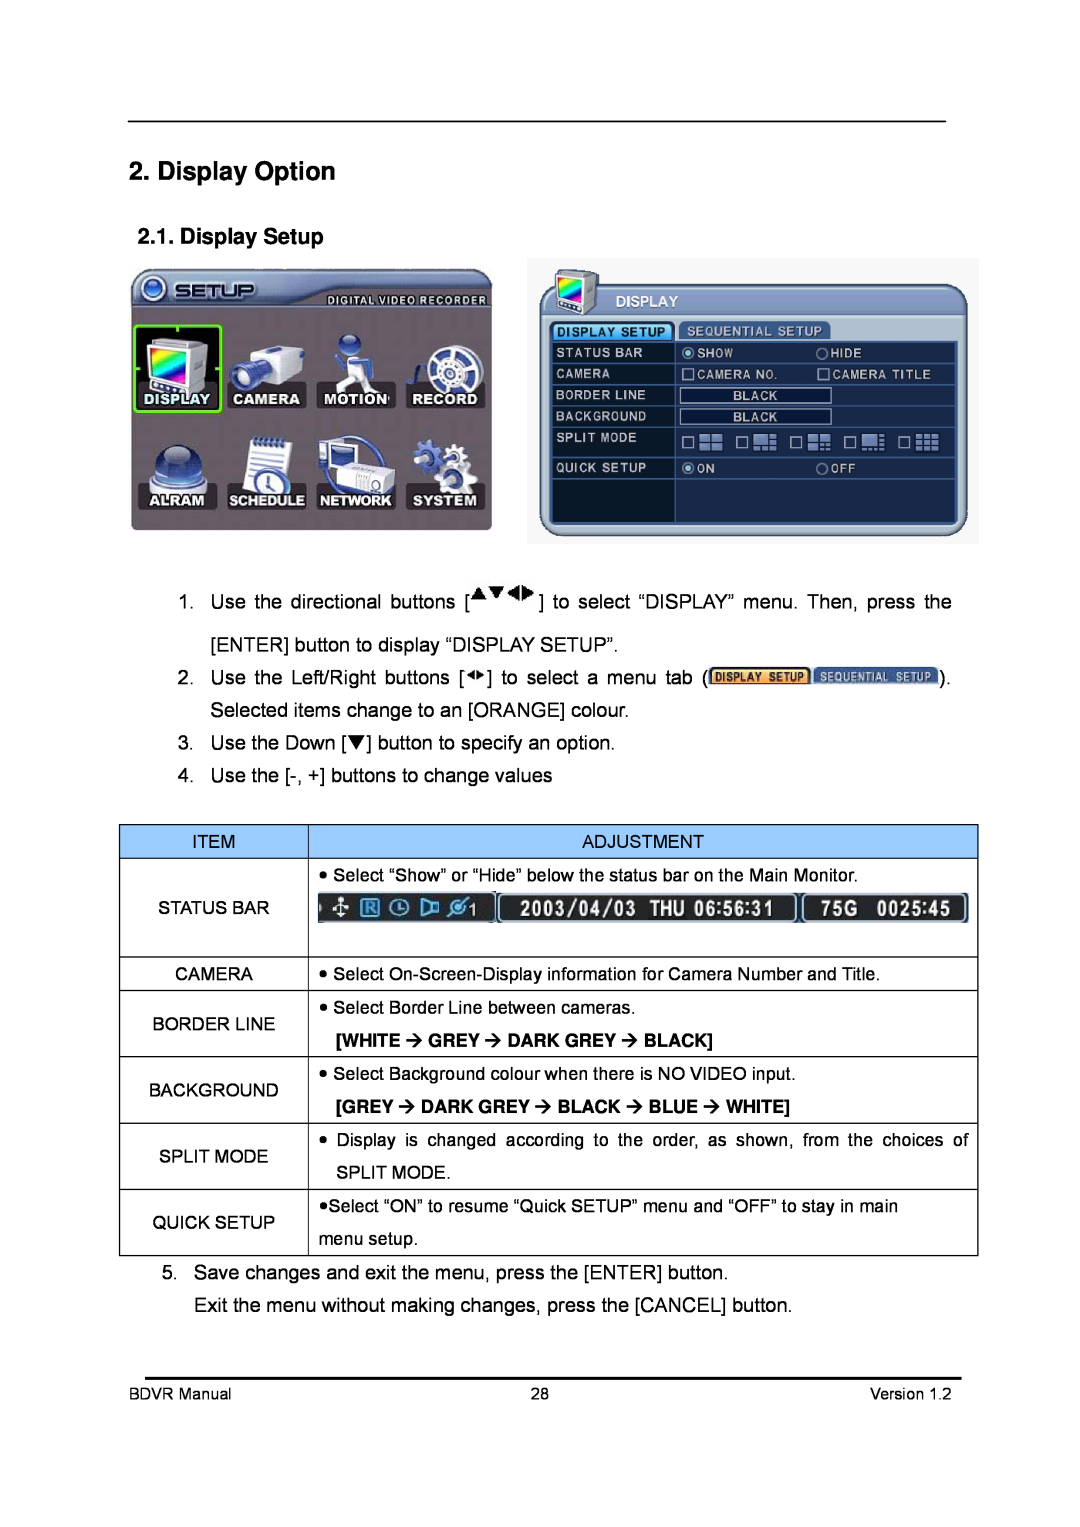 Genie BDVR-4, BDVR-8, BDVR-16 manual Display Option, Display Setup 